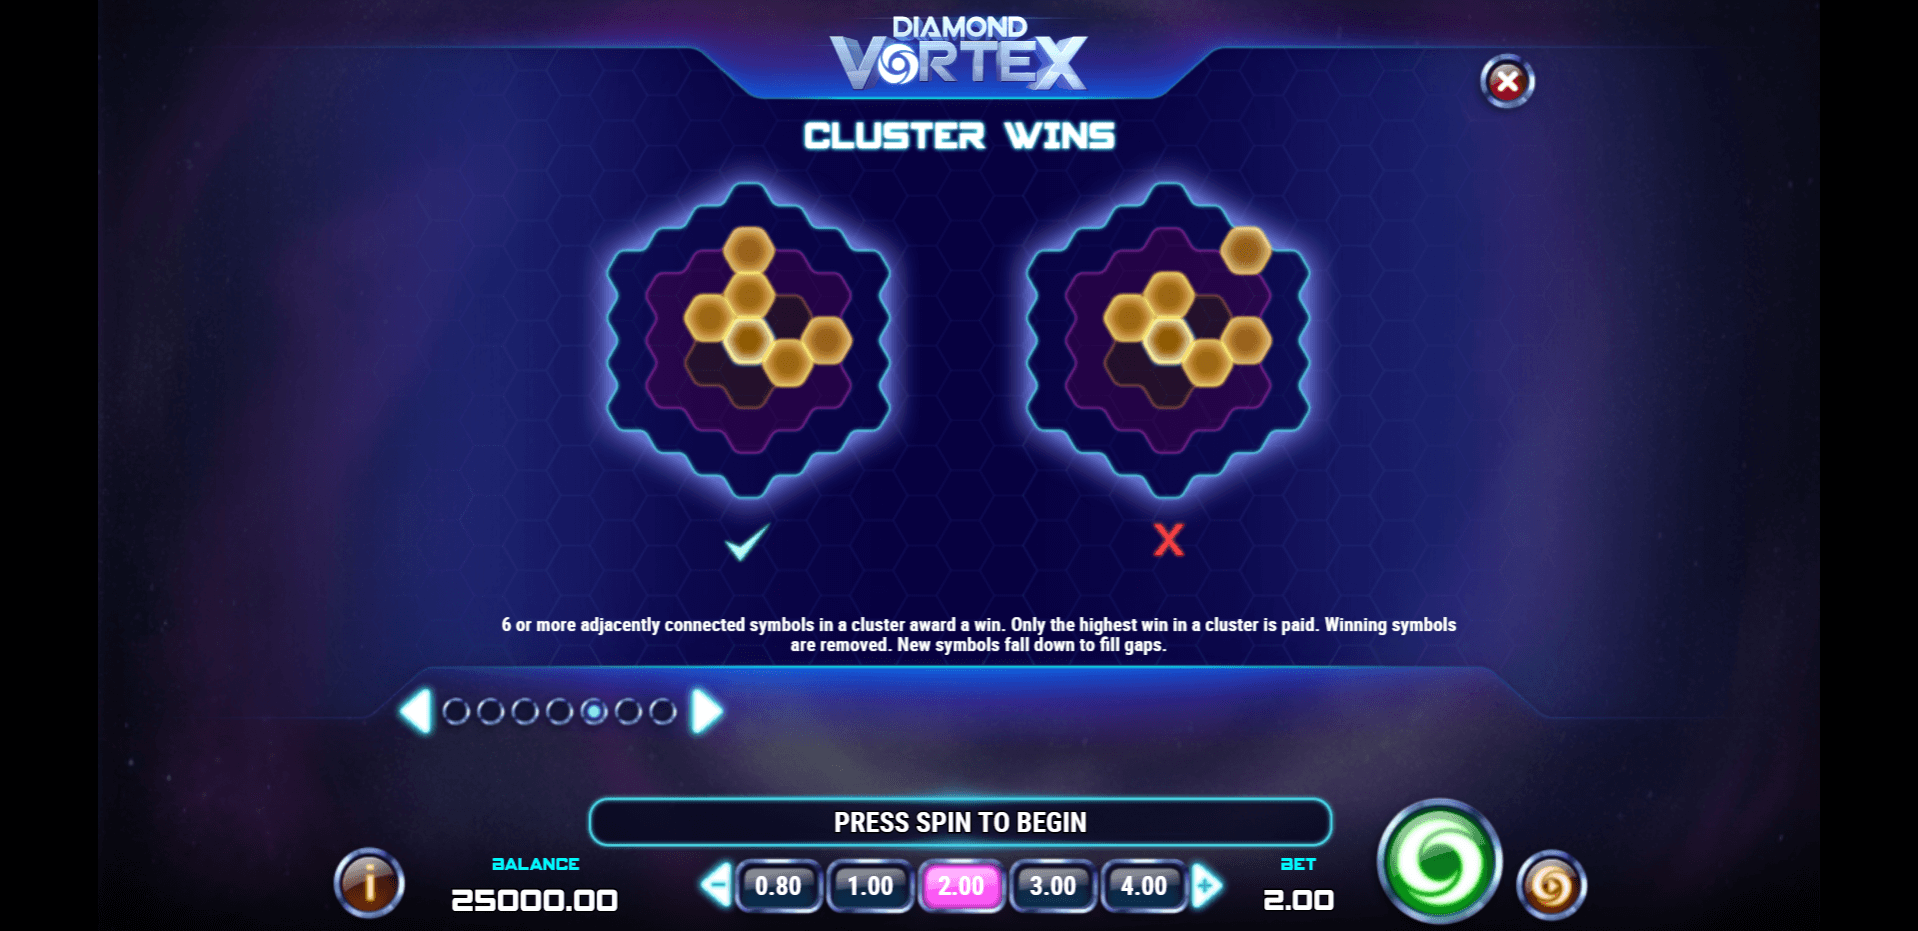 diamond vortex slot machine detail image 4